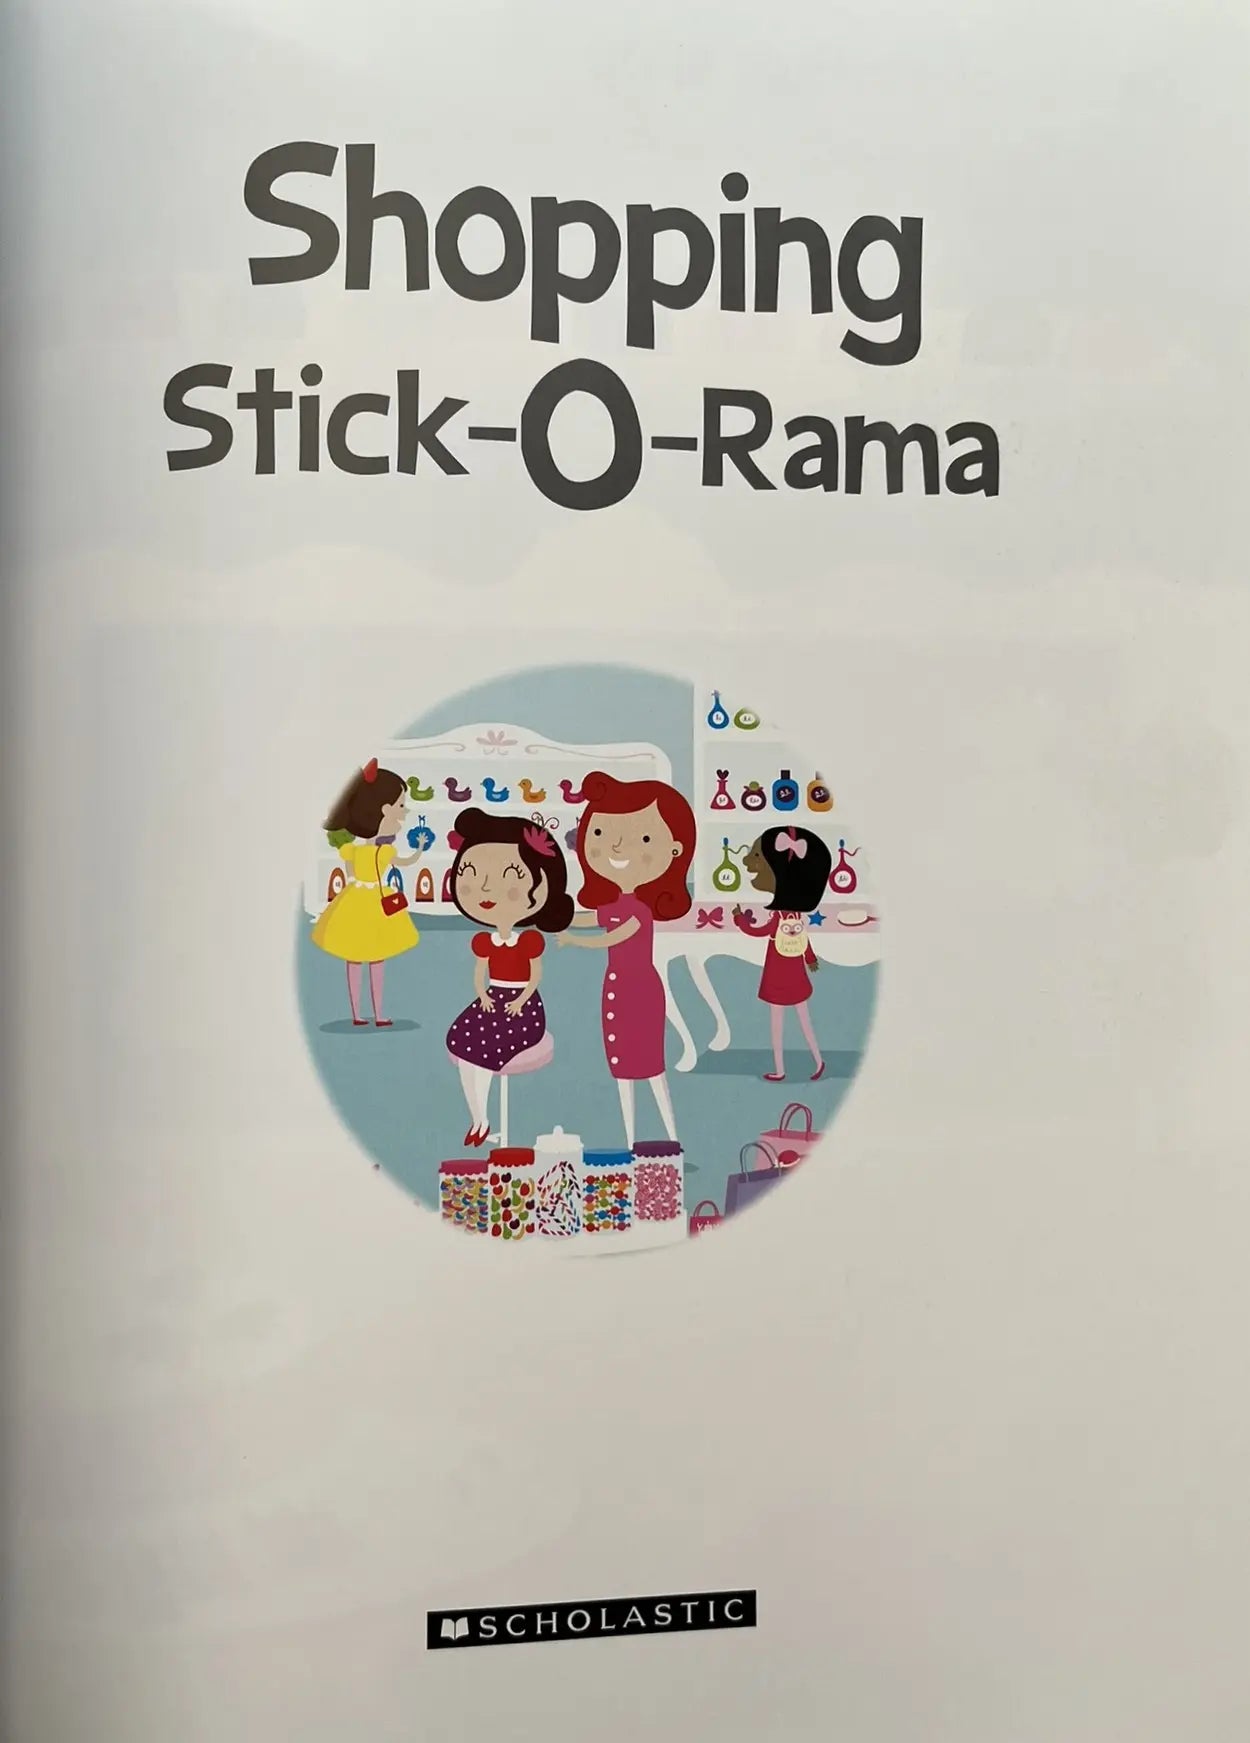 Shopping Stick-O-Rama